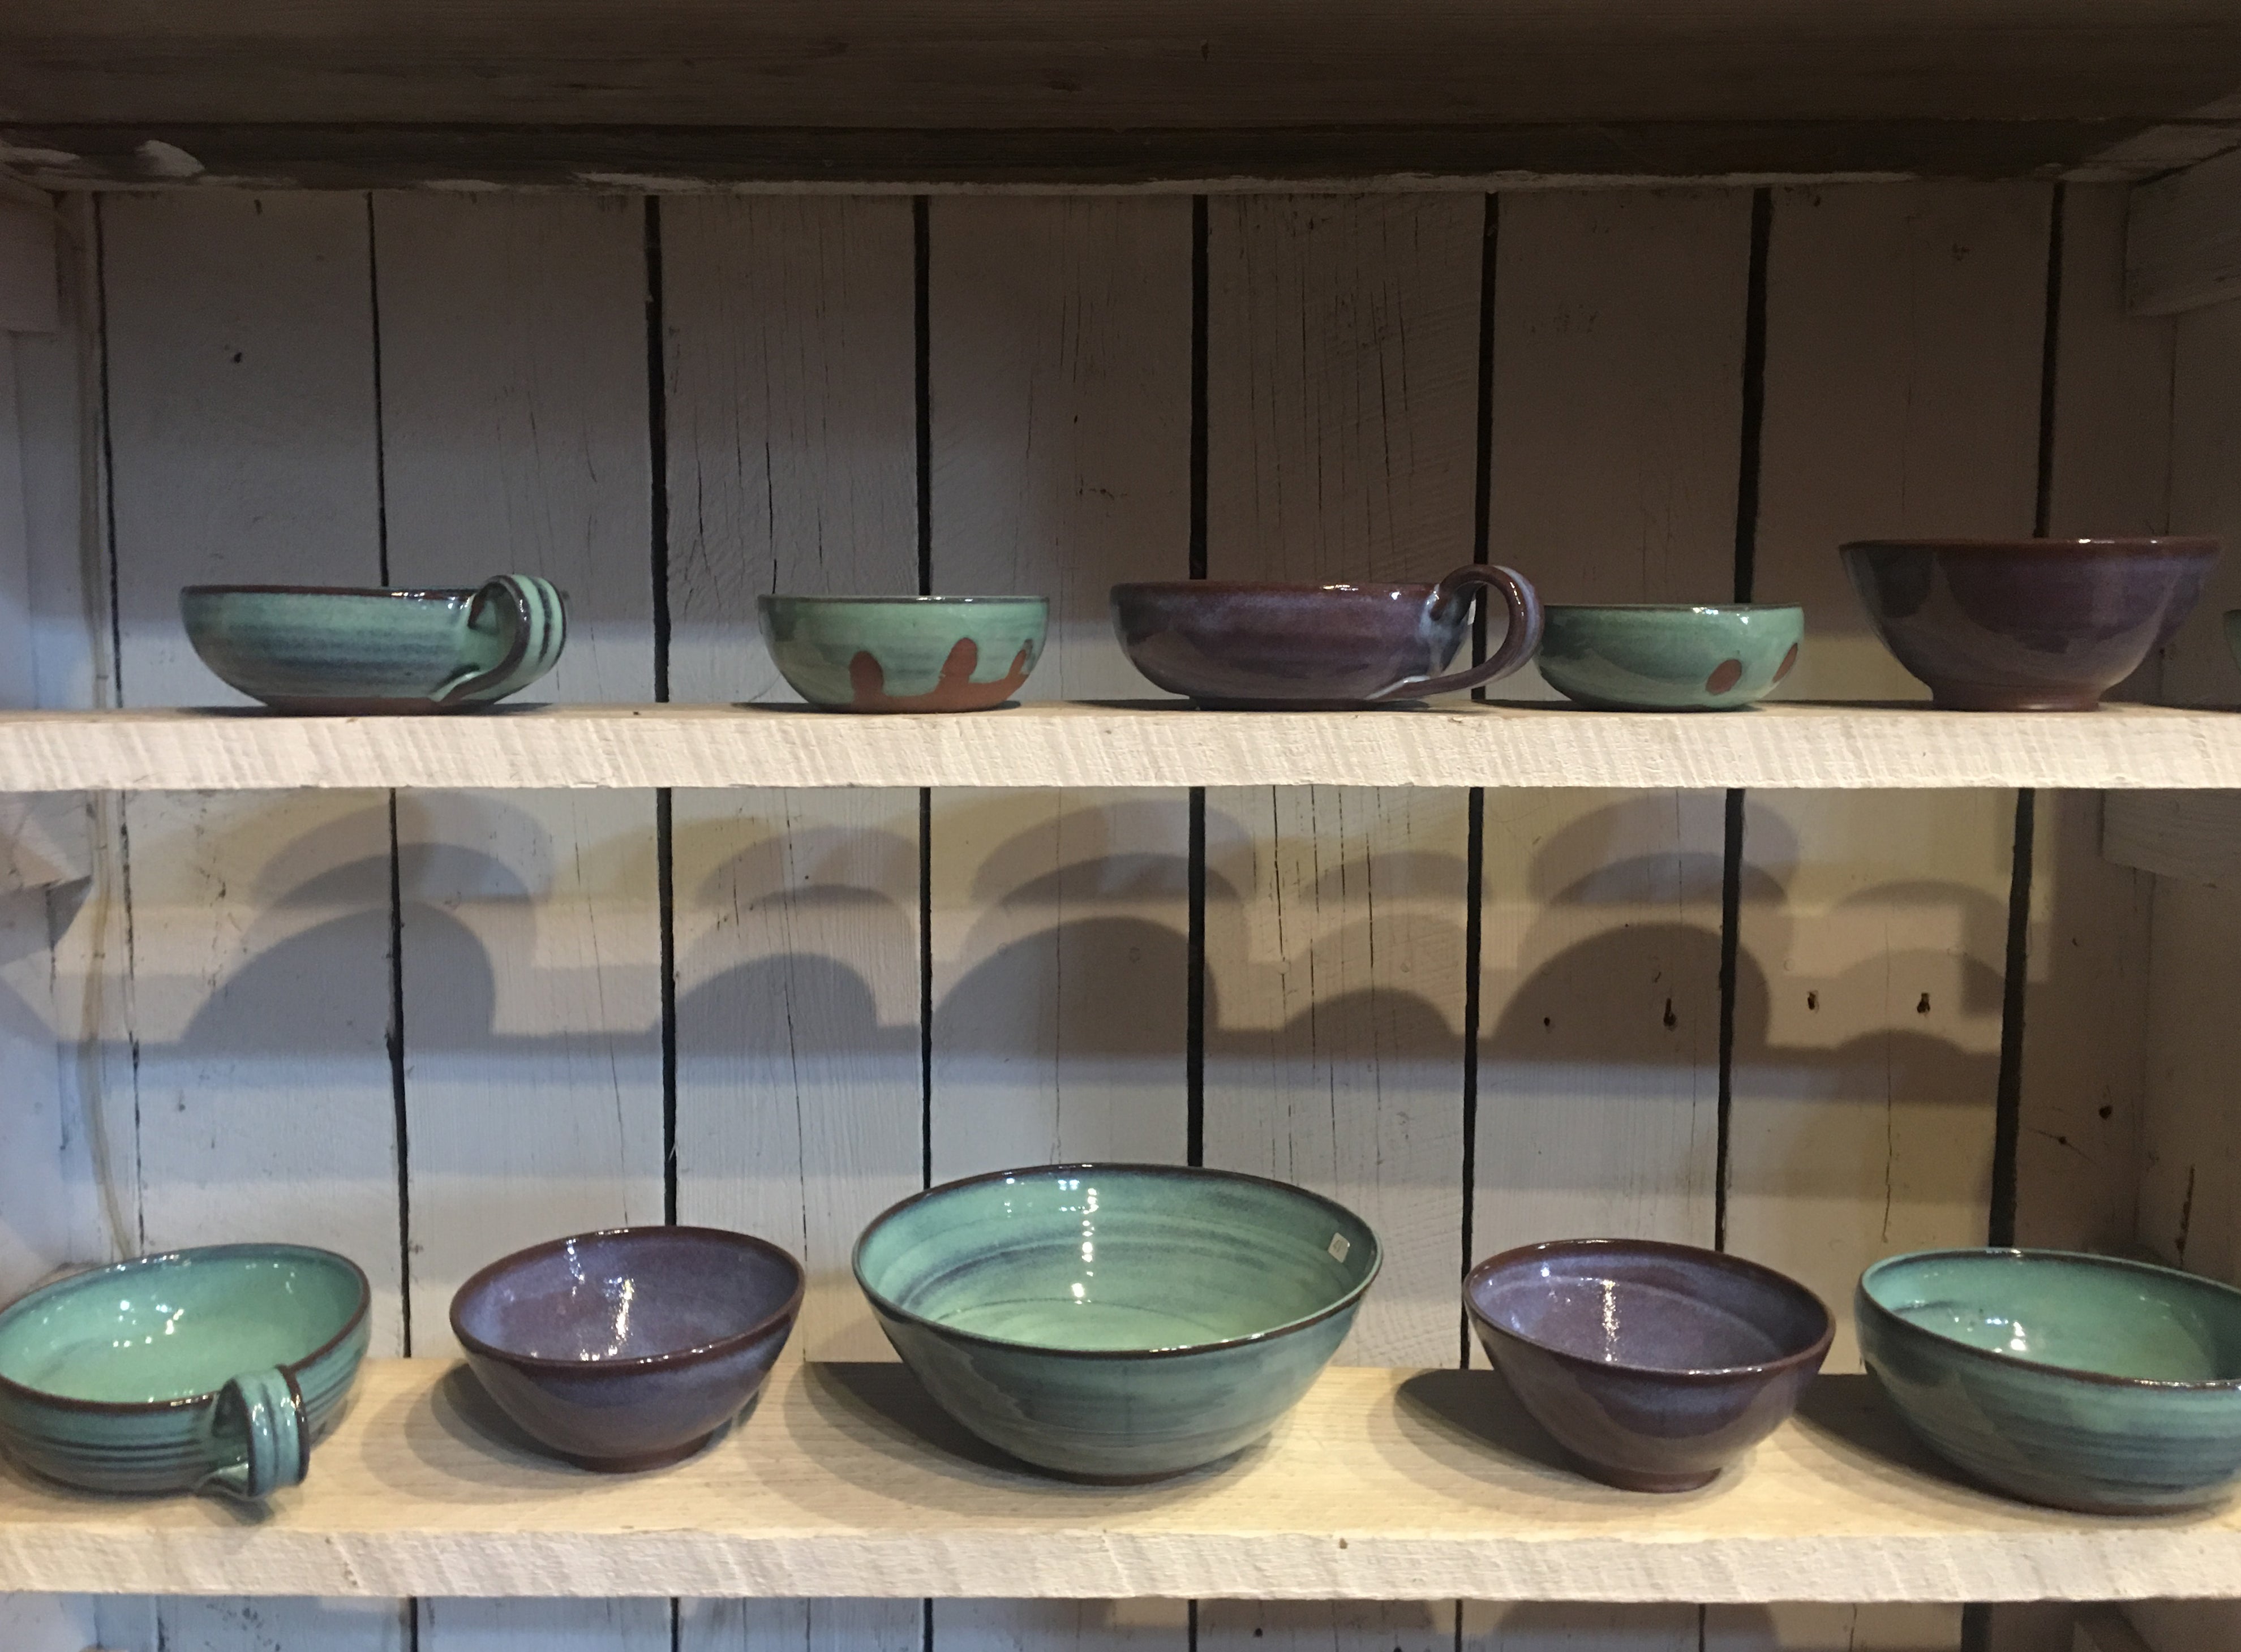 Green and purple bowls sit on shelves at Greenbridge Pottery Studio